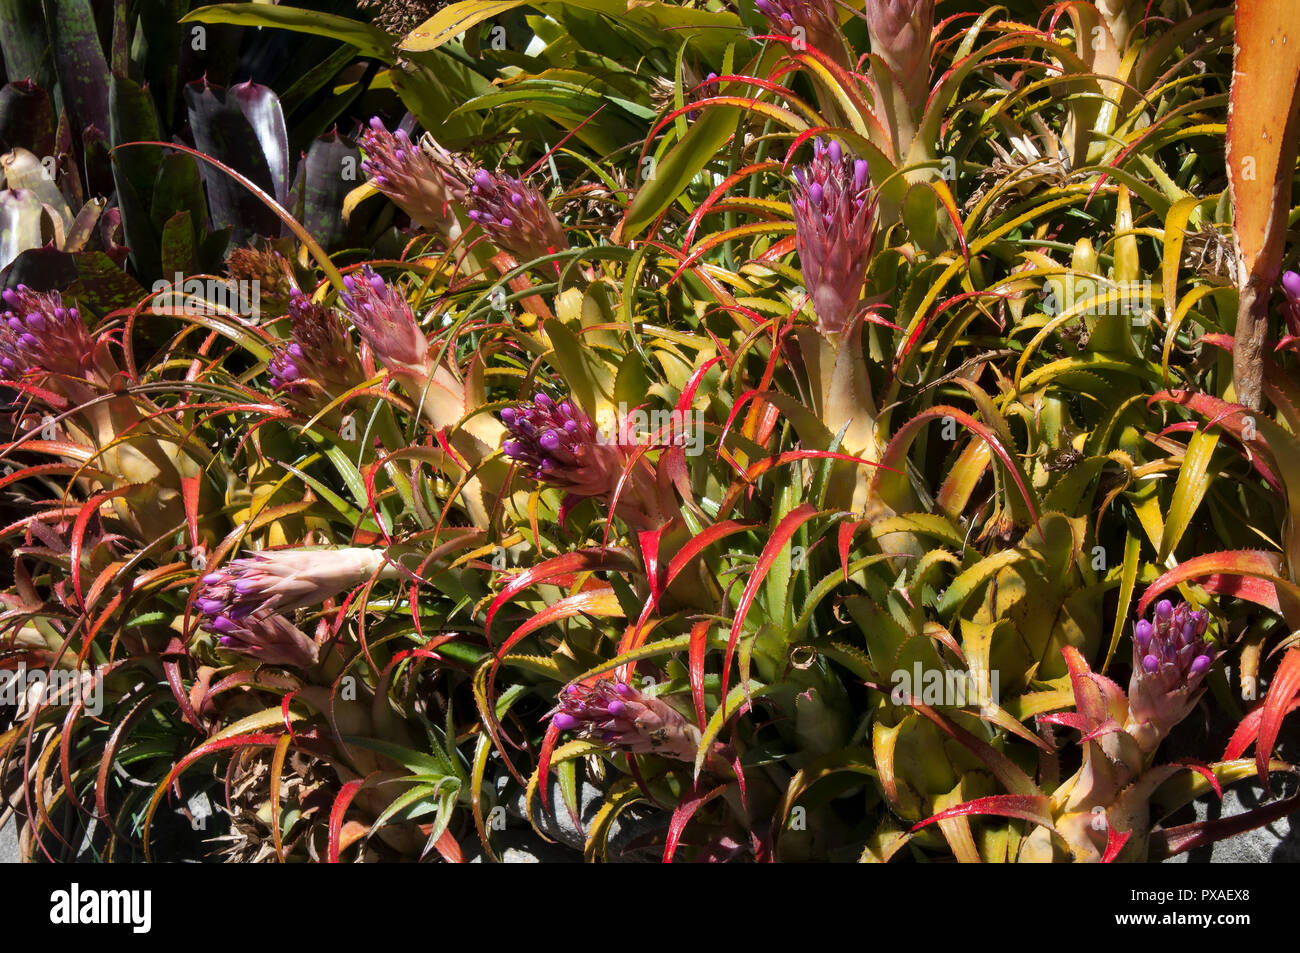 Sydney Australia, flowering bromeliad plants Stock Photo